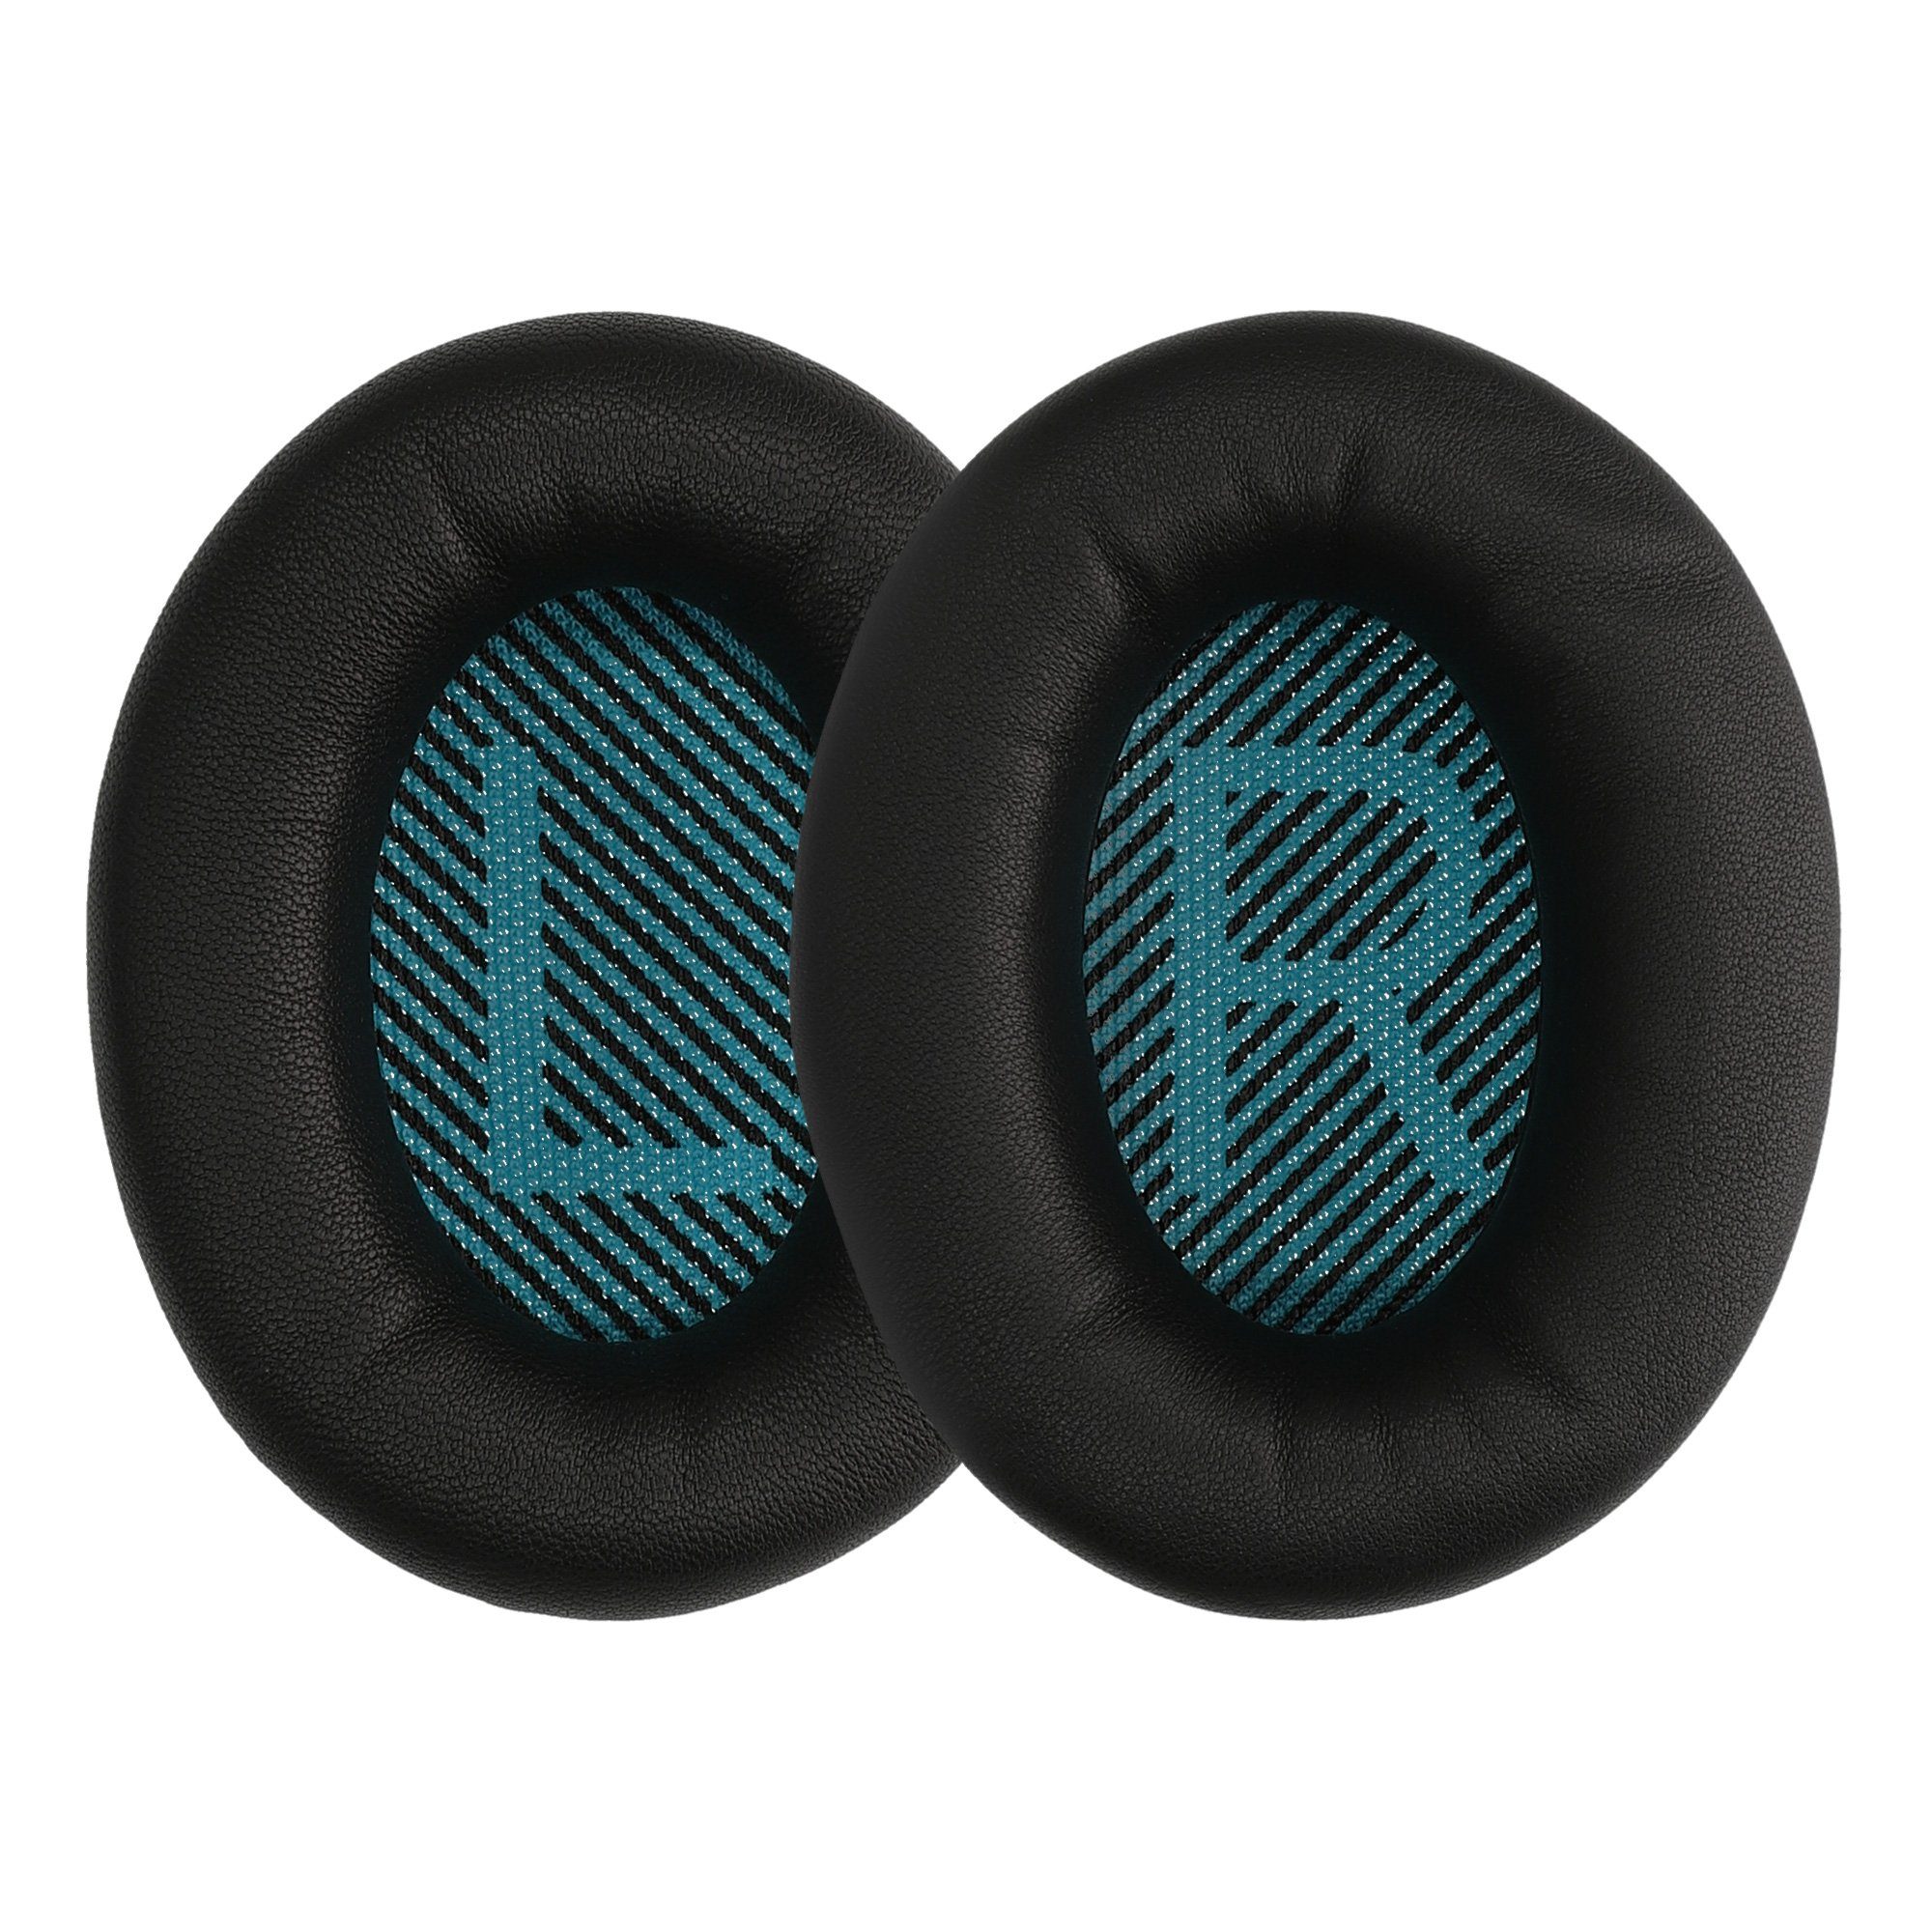 kwmobile 2x Ohr Polster für Bose Soundlink Around-Ear Wireless II Ohrpolster (Ohrpolster Kopfhörer - Kunstleder Polster für Over Ear Headphones) Schwarz